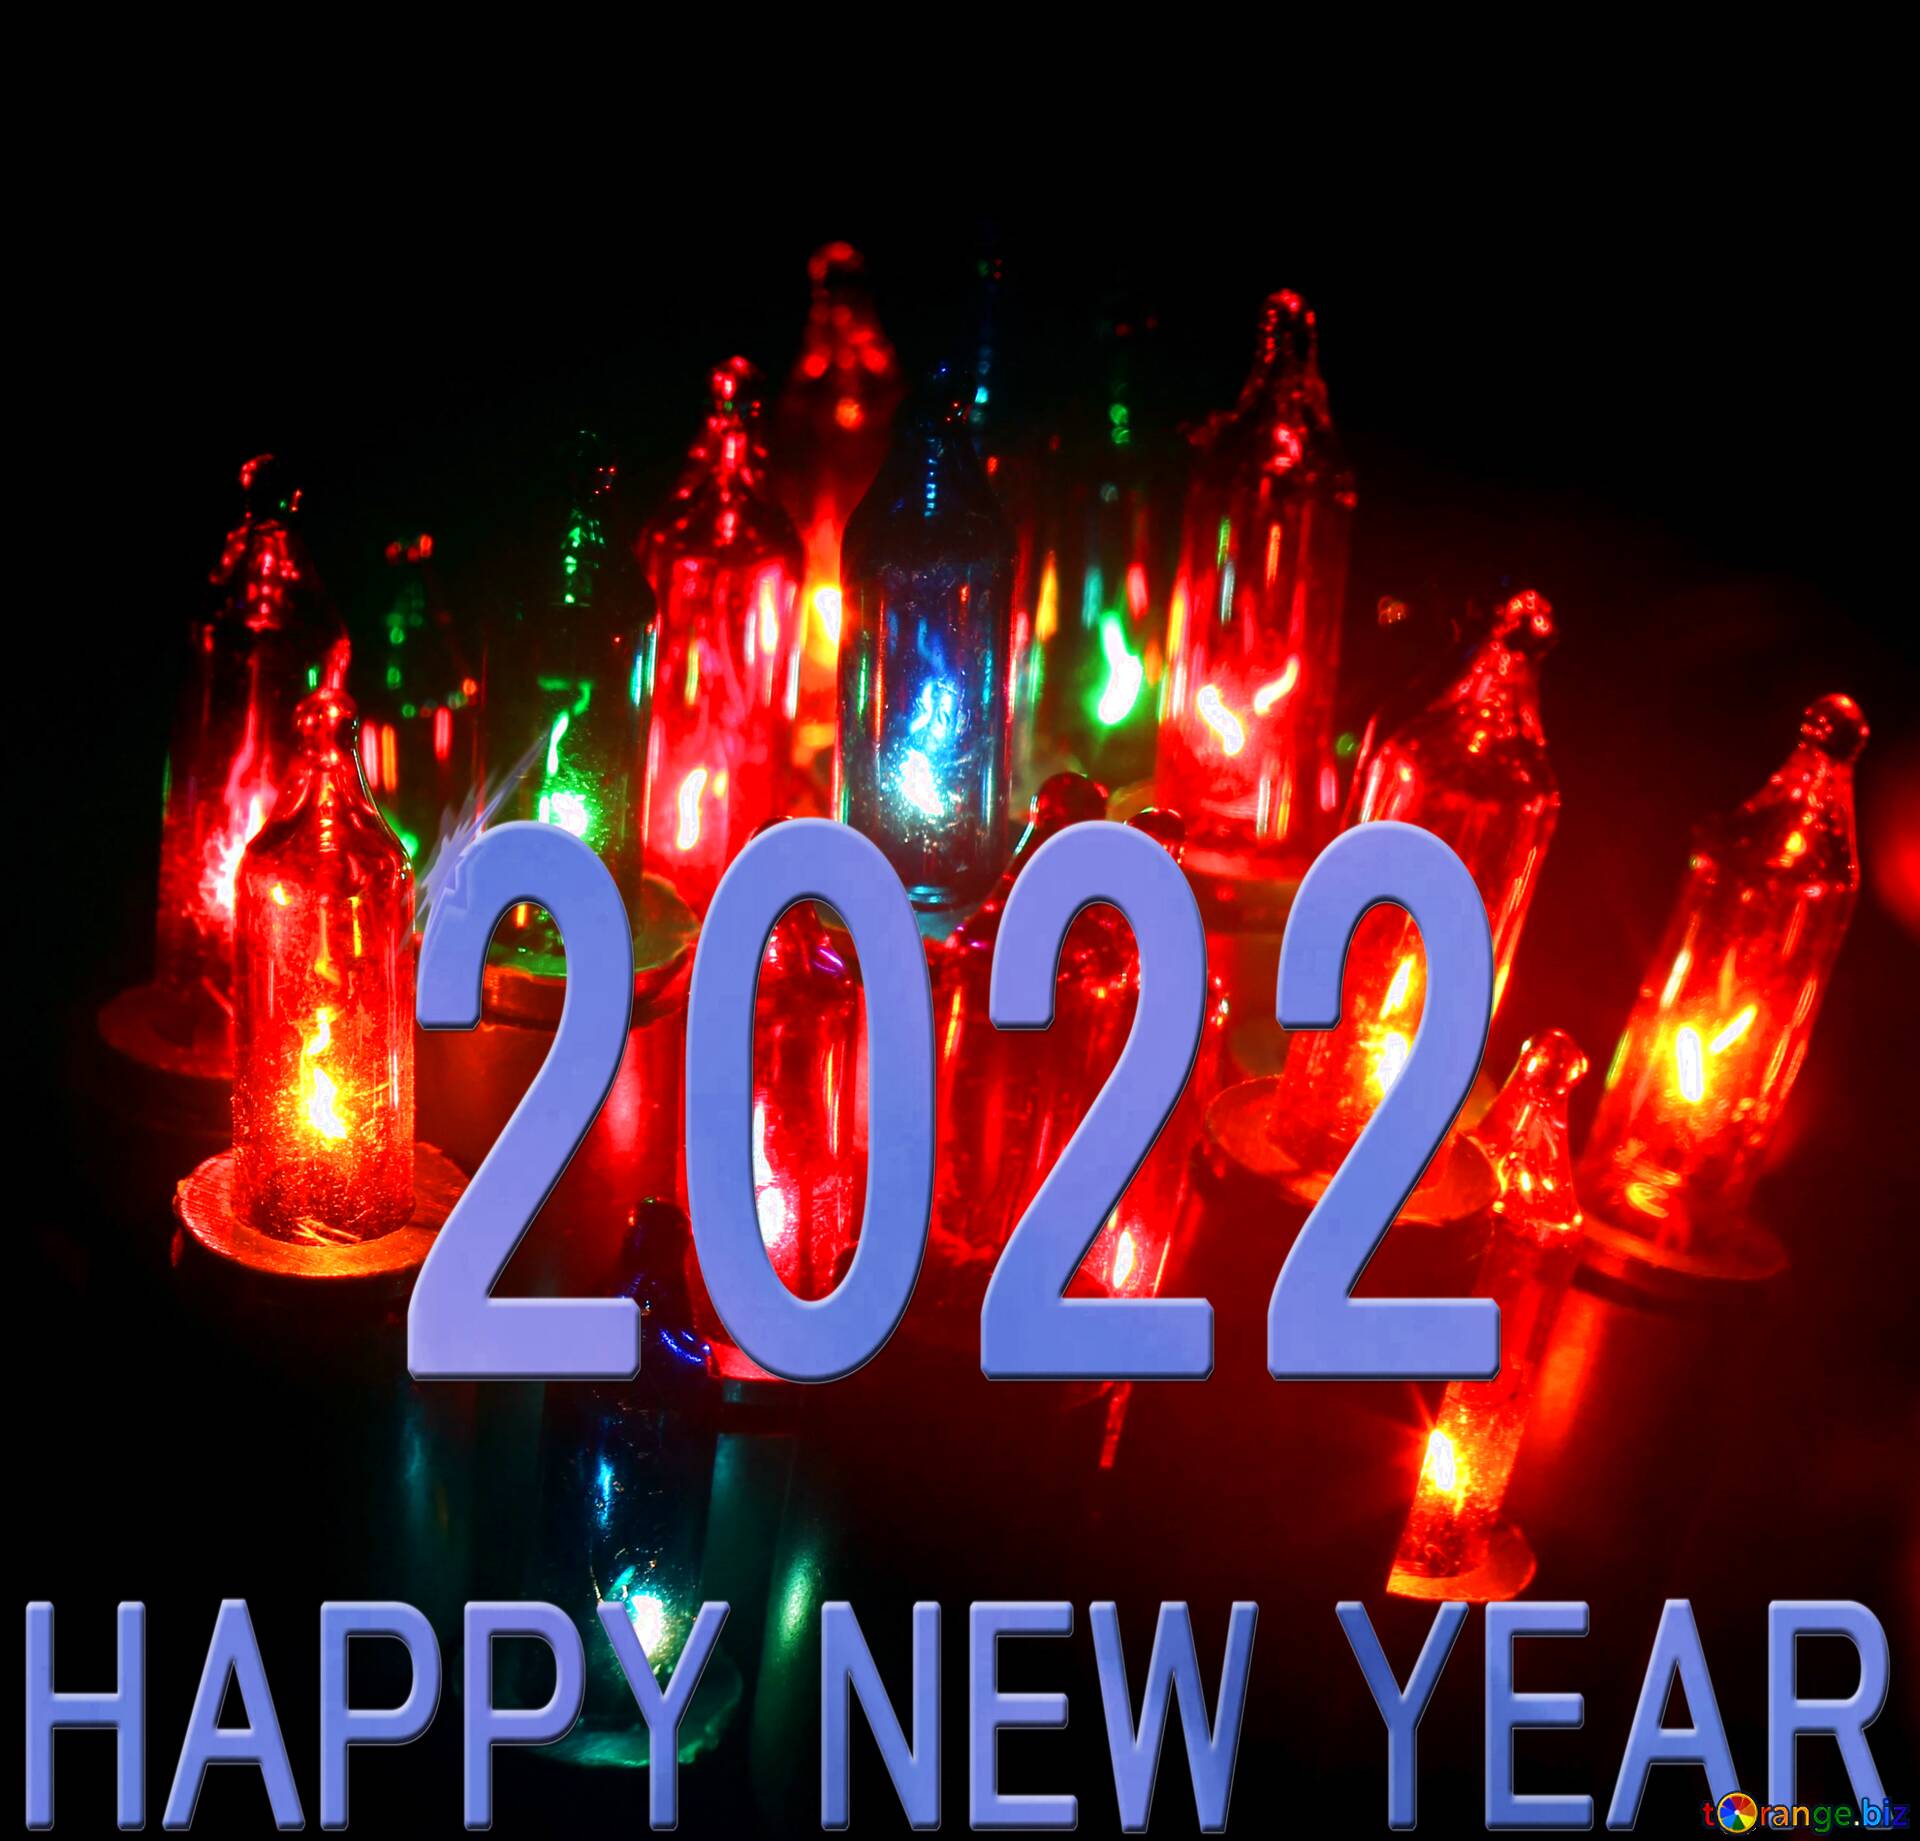 Happy New Year Eve 2022 Pictures Download Free Picture New Year S Eve Happy New Year 2022 On Cc By License Free Image Stock Torange Biz Fx 216257